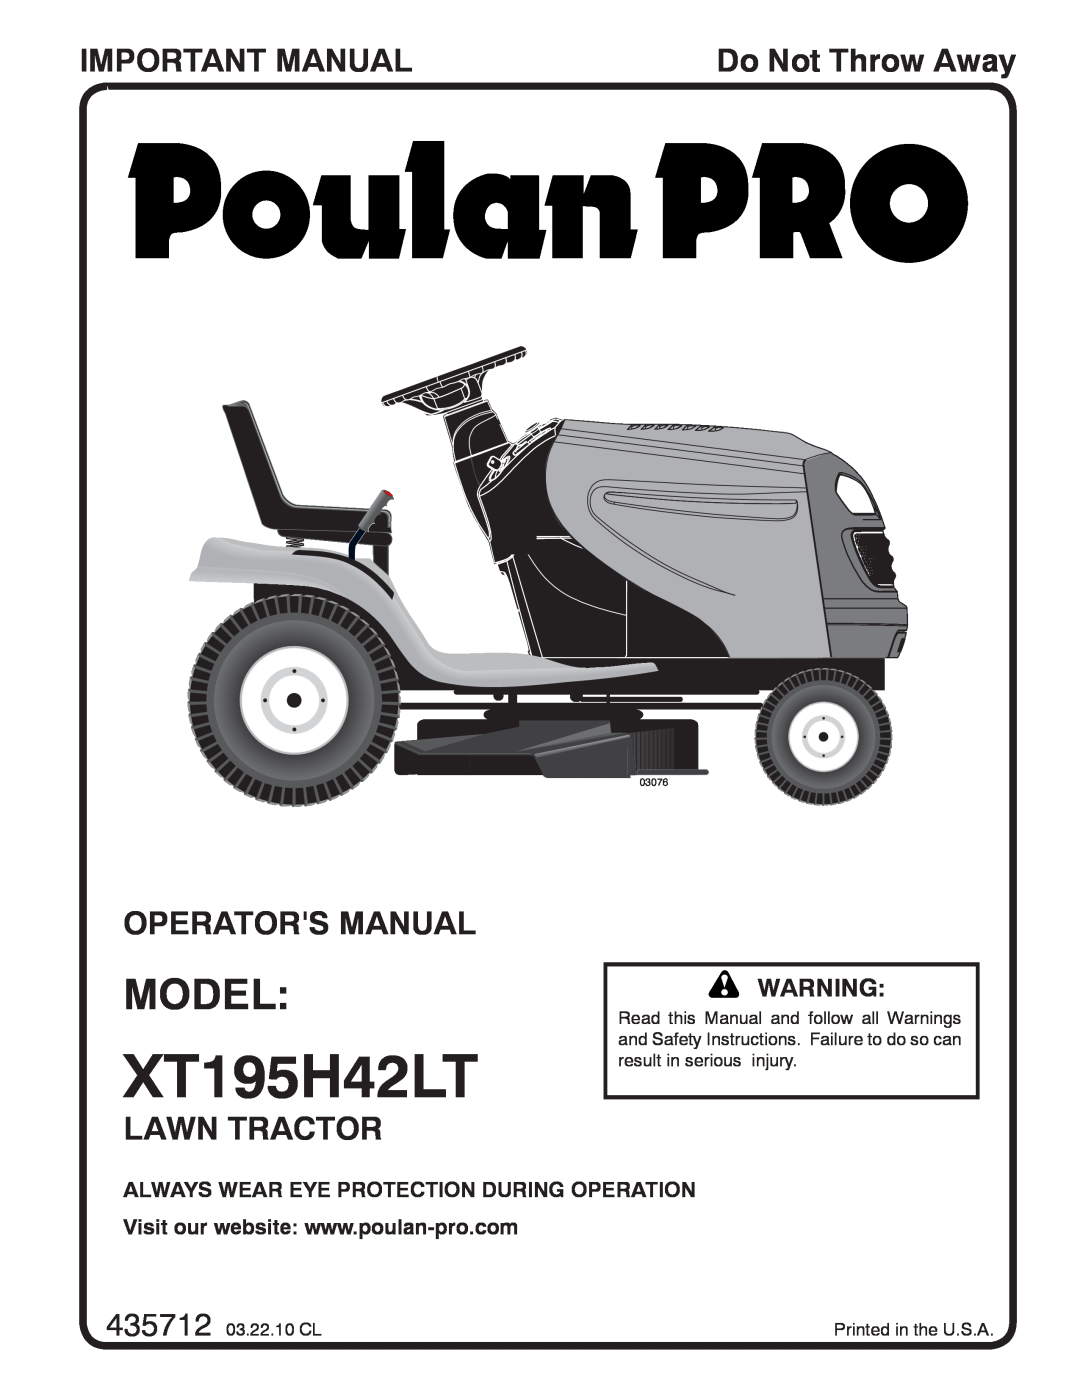 Poulan 96042007202 manual Model, Important Manual, Operators Manual, Lawn Tractor, XT195H42LT, Do Not Throw Away, 03076 